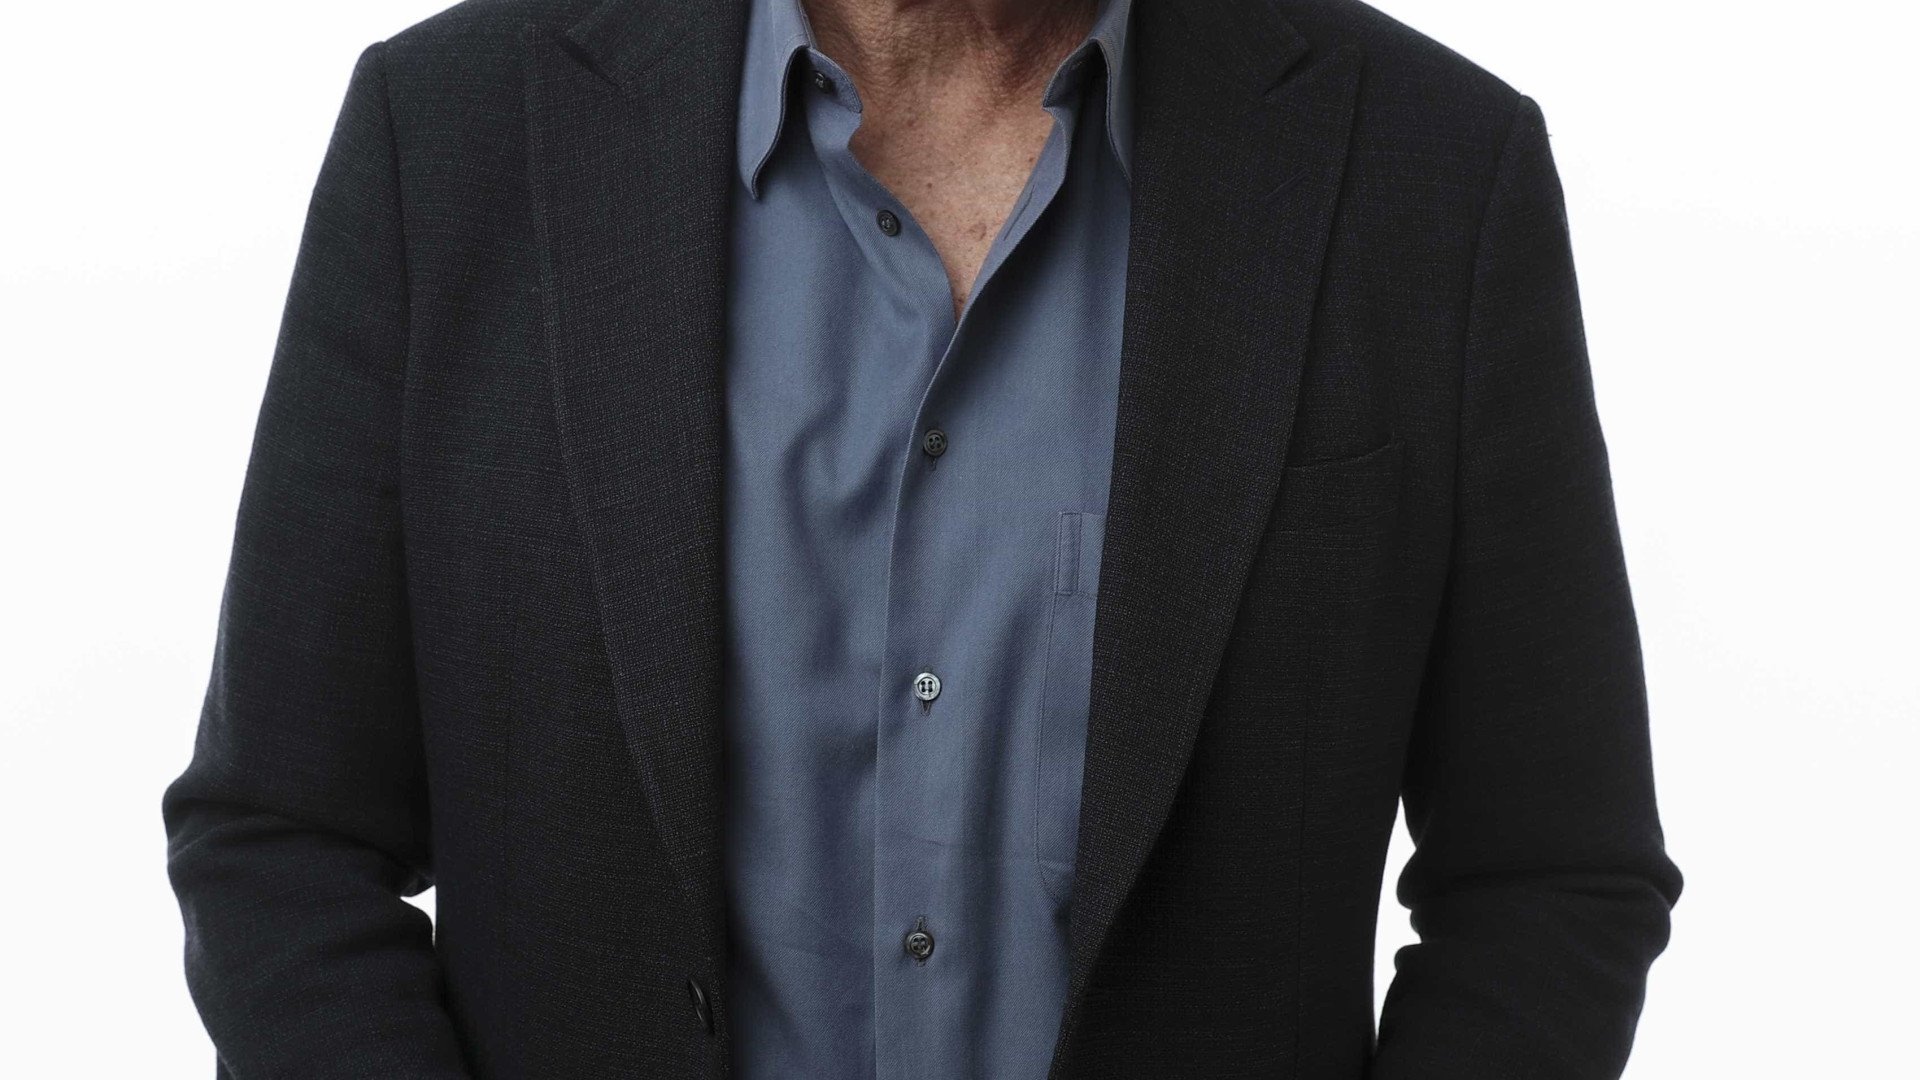 Aos 69 anos, ator Richard Gere será pai pela segunda vez